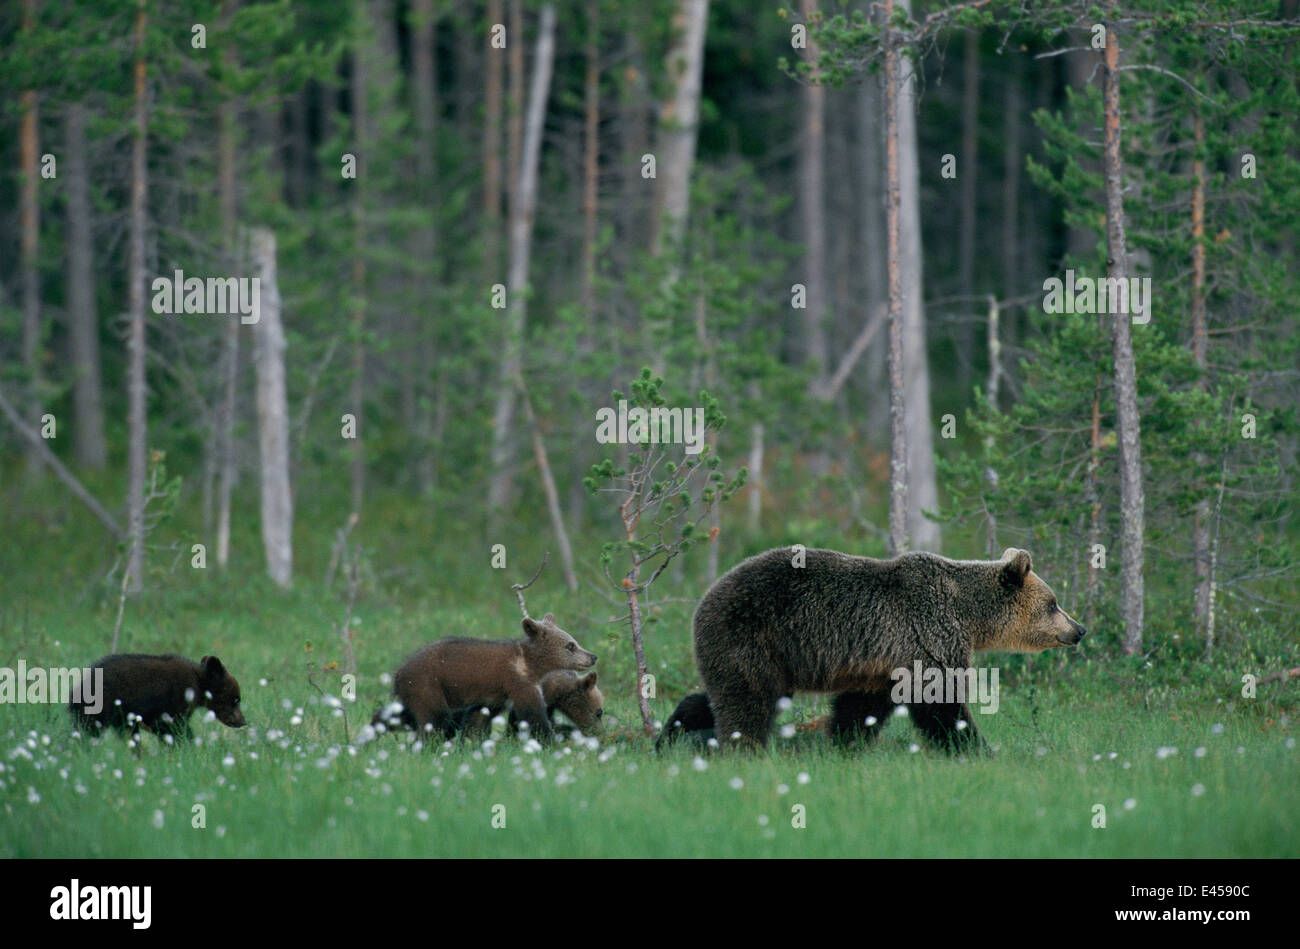 Europeo femminile orso bruno con cuccioli seguenti {Ursus arctos} Lapponia finlandese. Foto Stock